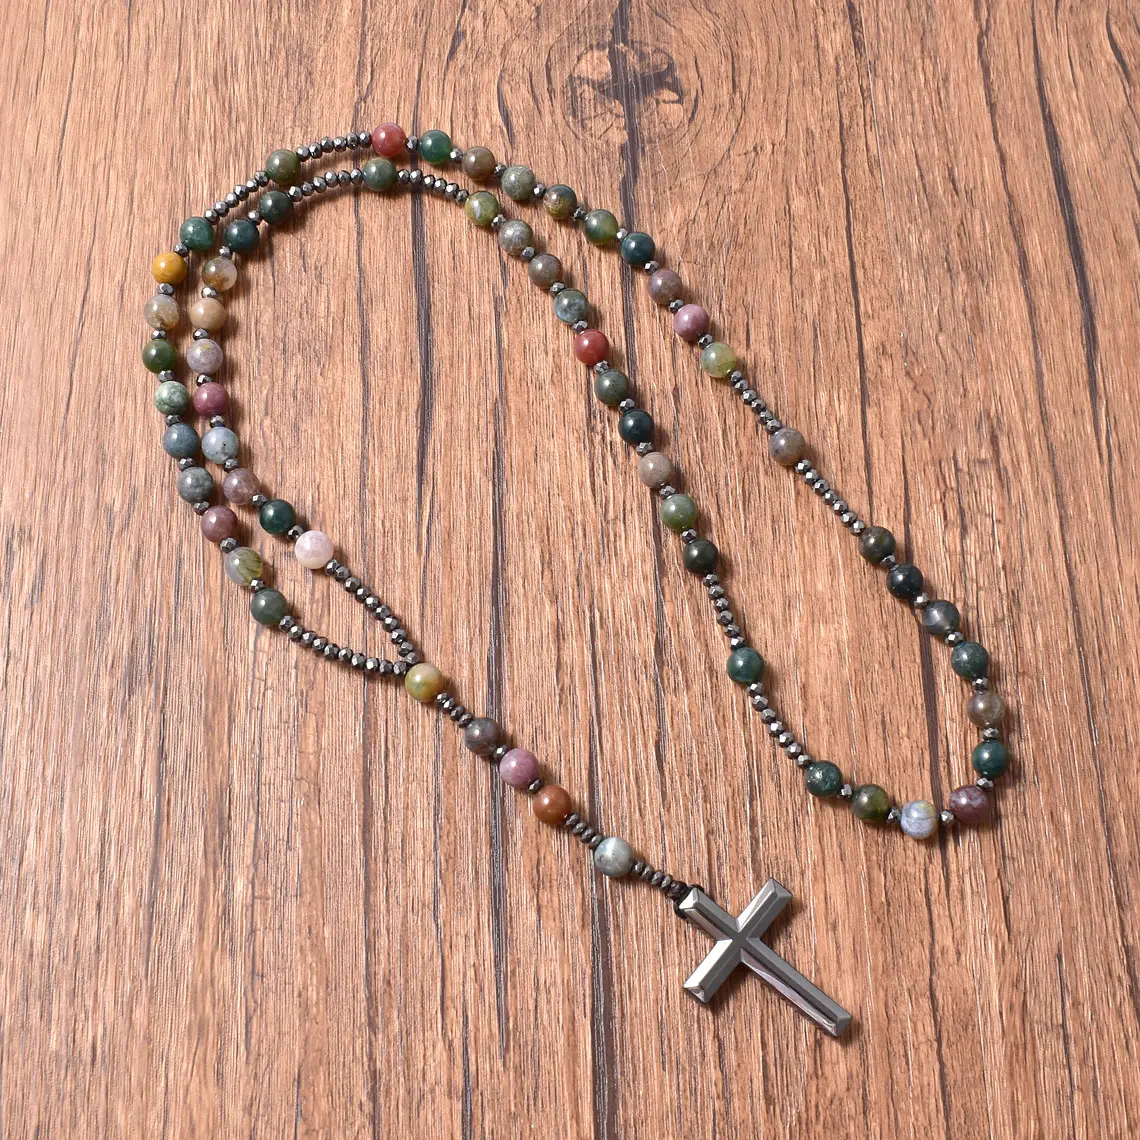 Crucifix Stone Agate Catholic Necklace Christian Jewelry Religious Rosary Cross Pendant Necklace